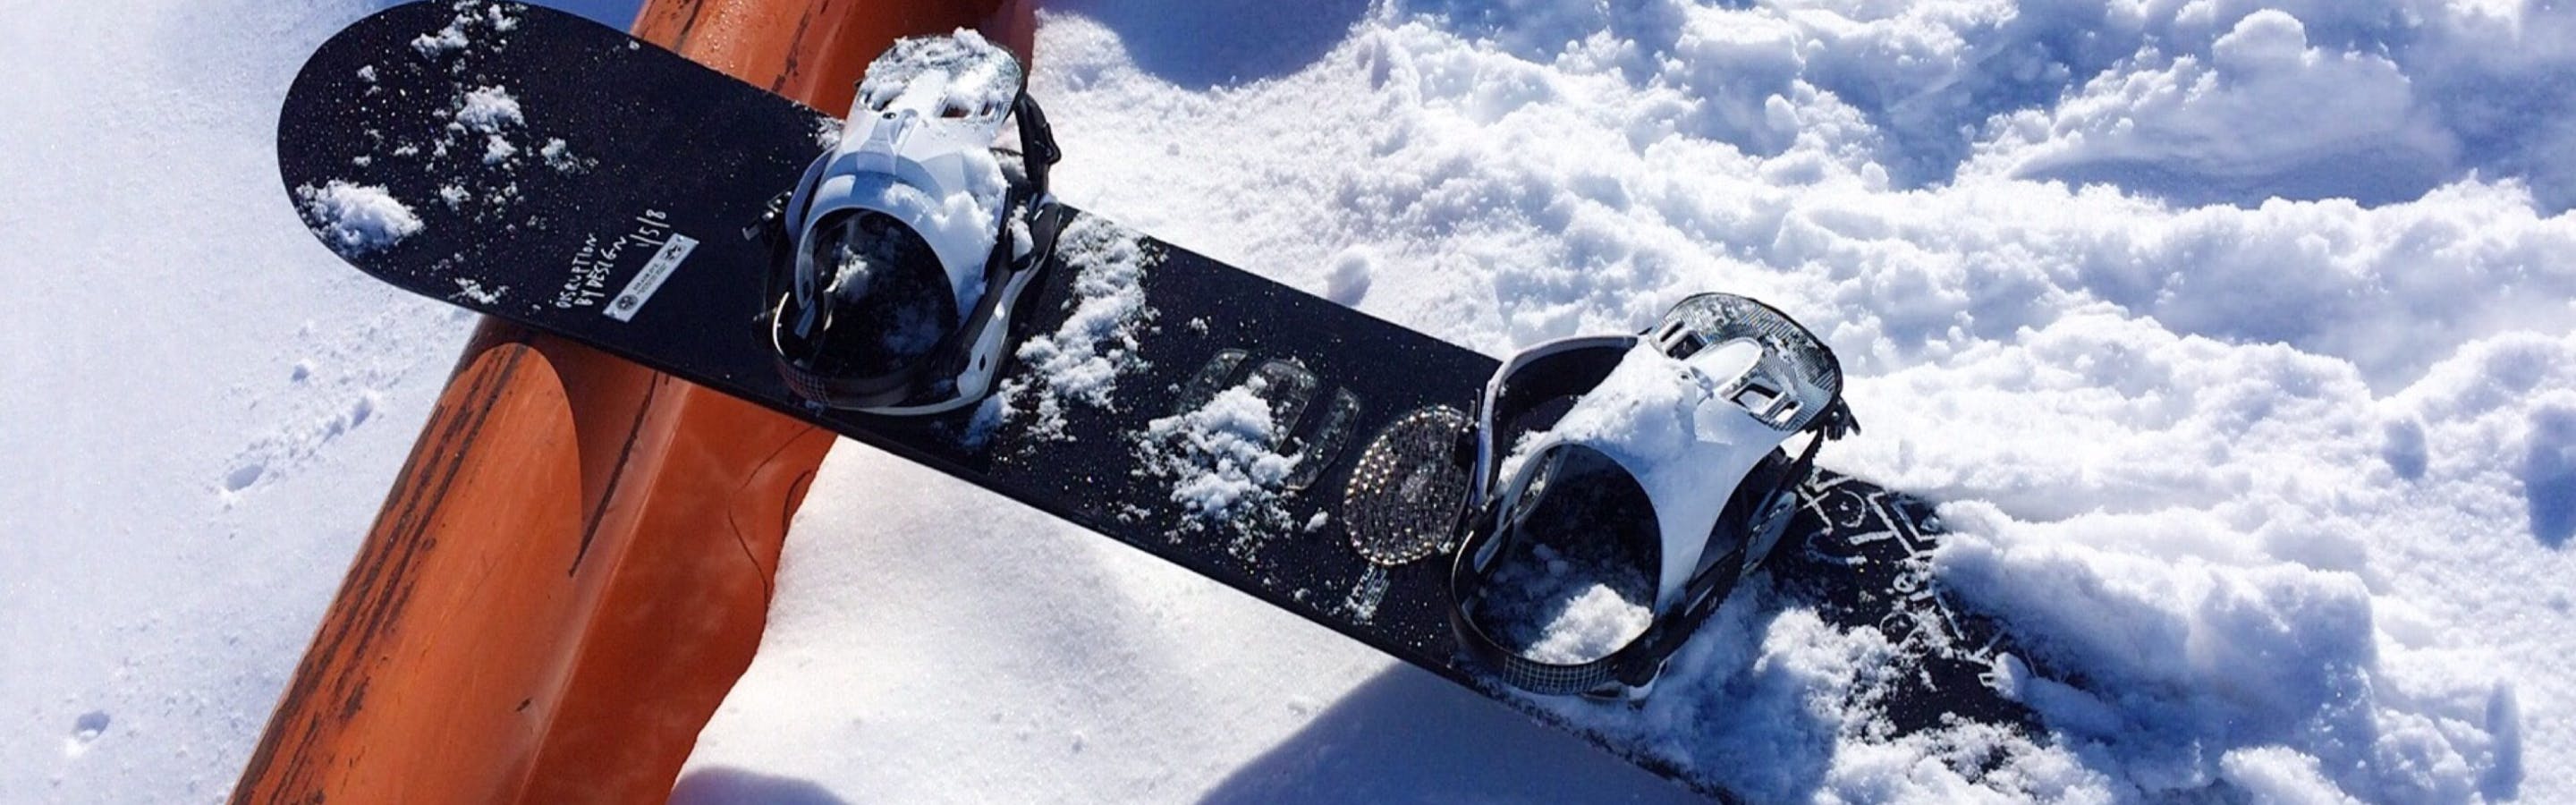 How to Mount Snowboard Bindings & Other Binding Basics